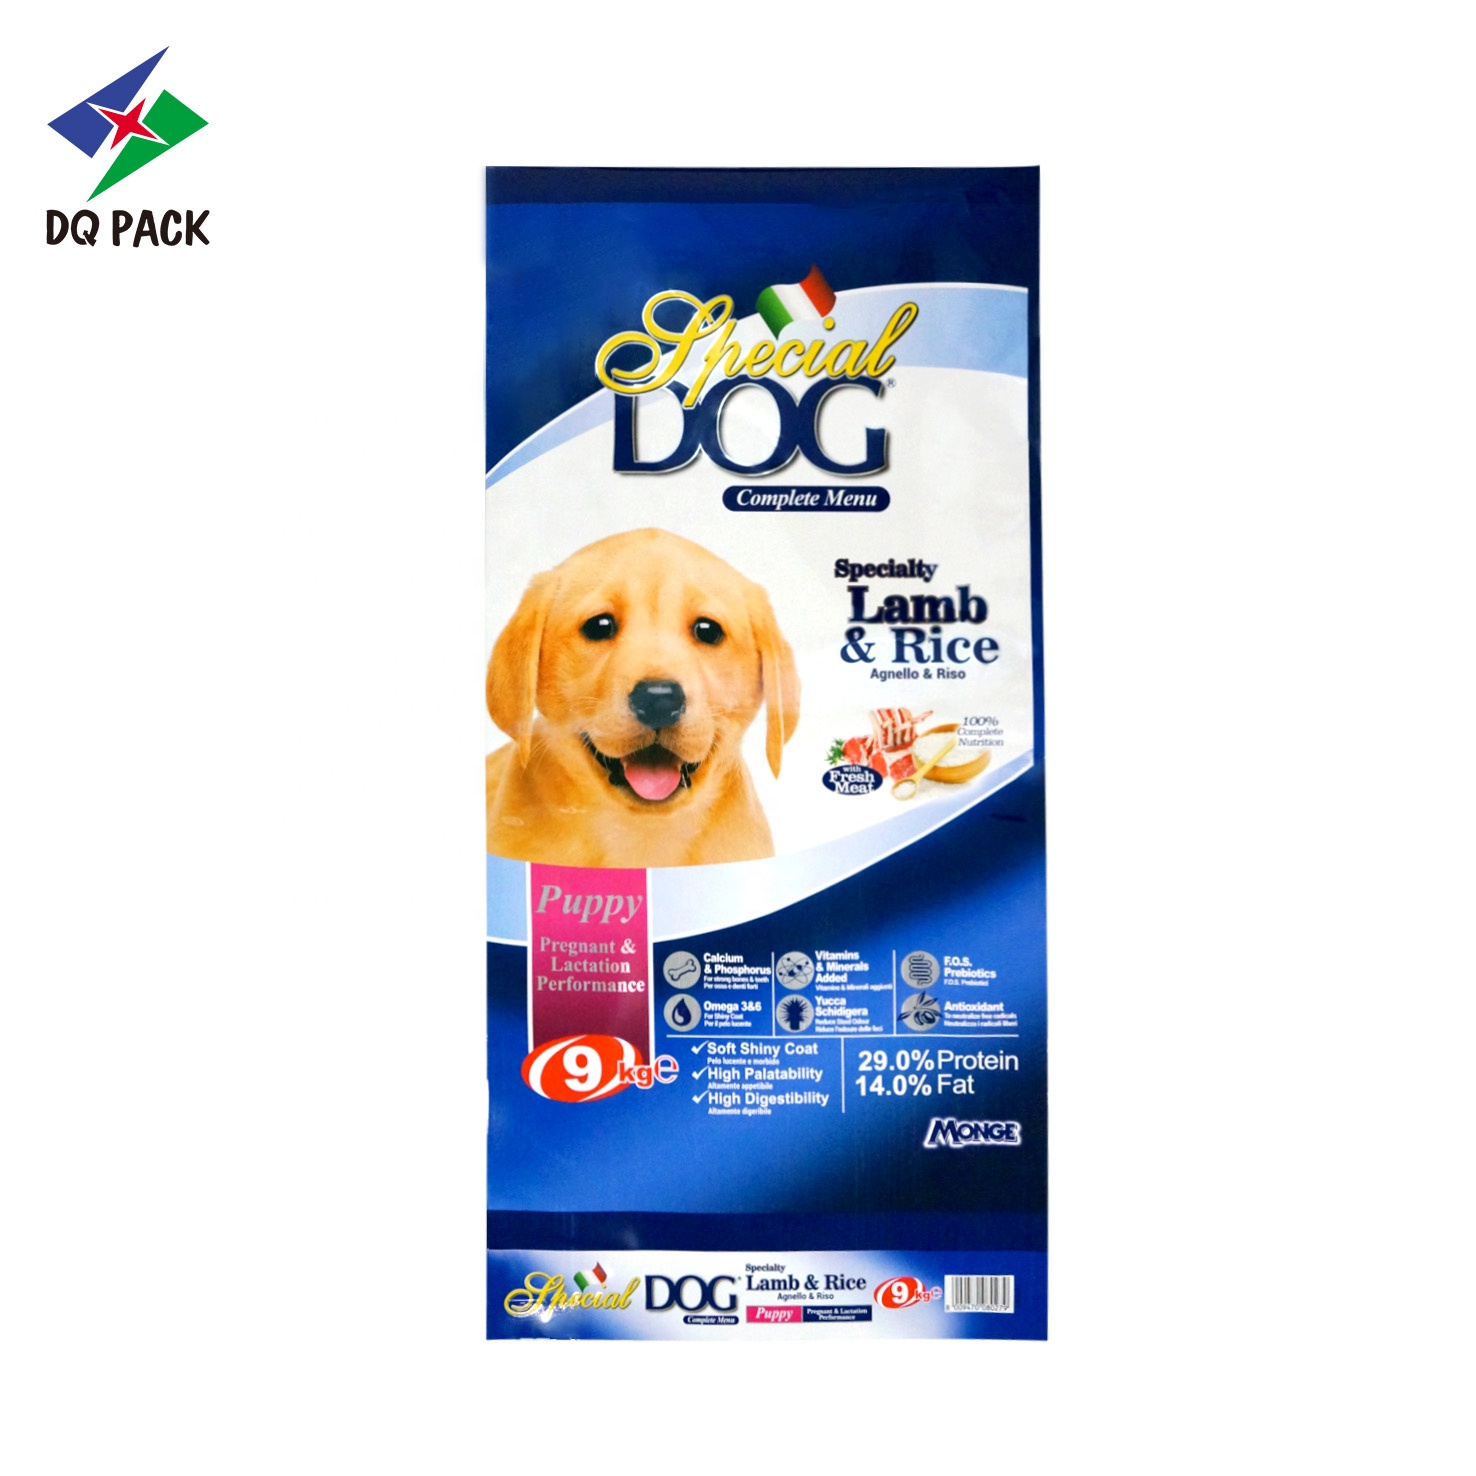 DQ PACK Custom Printed Plastic Packaging Bag Heat Seal 4 Side Sealed Pouch Pet Food Bag